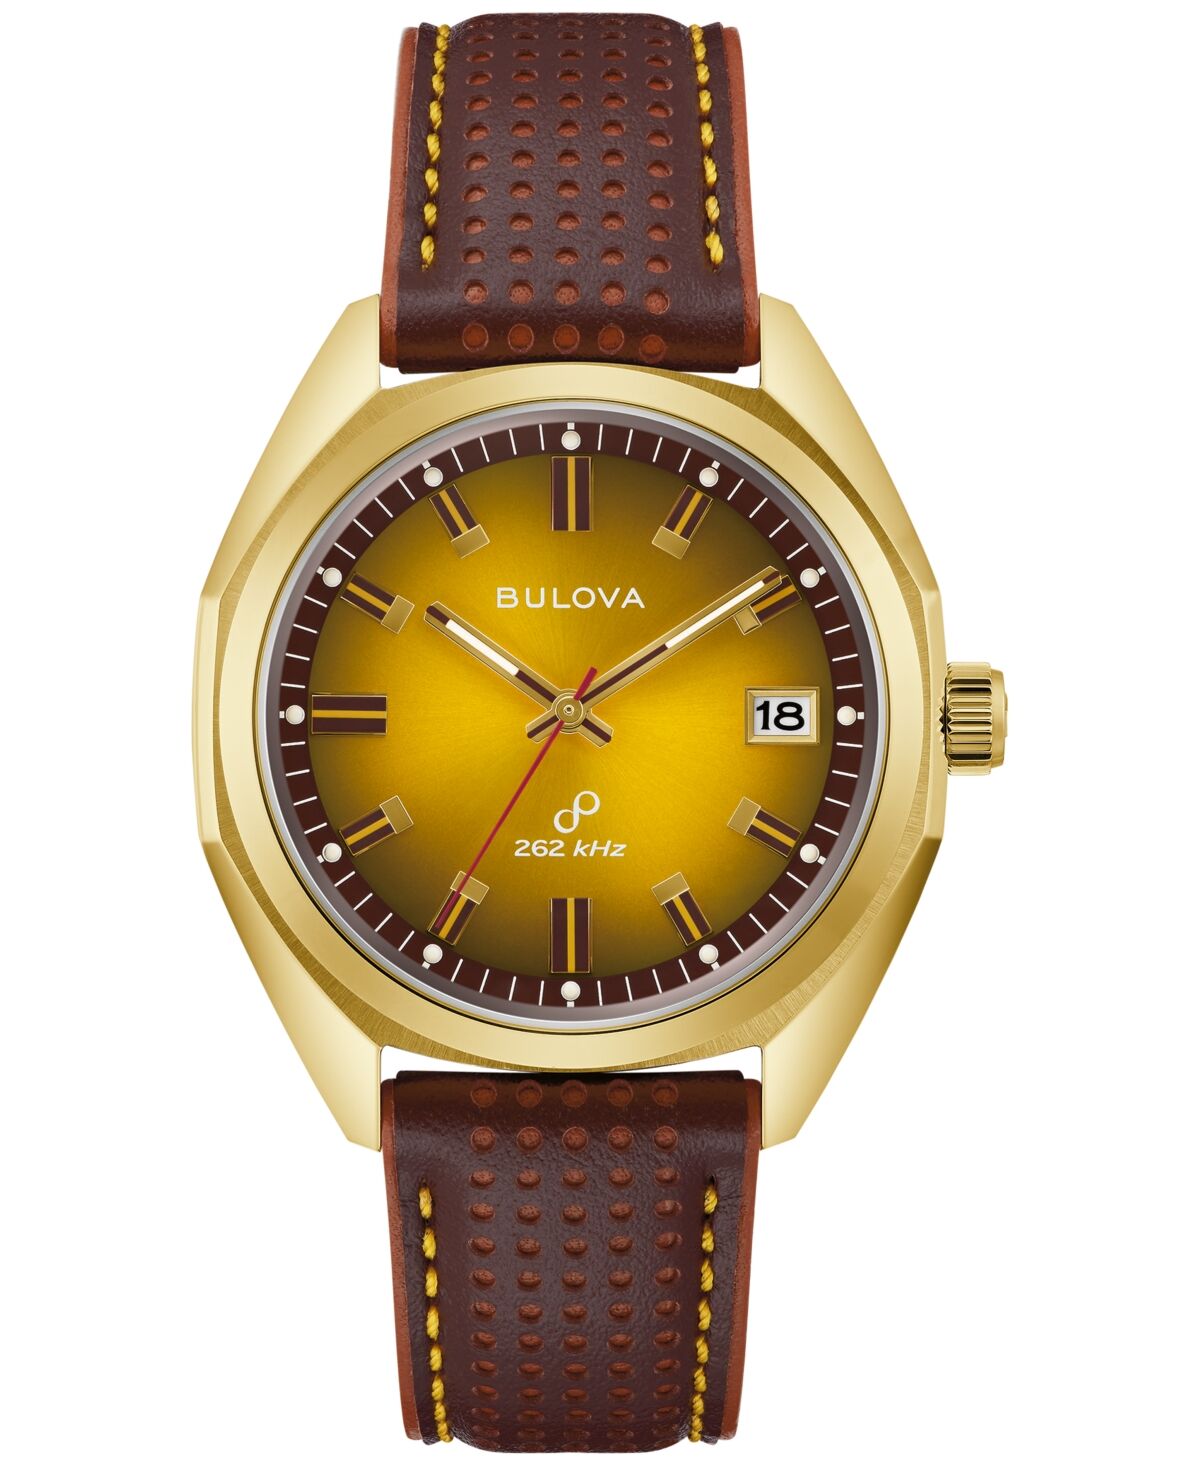 Bulova Men's Classic Jet Star Brown Leather Strap Watch 40mm - Brown